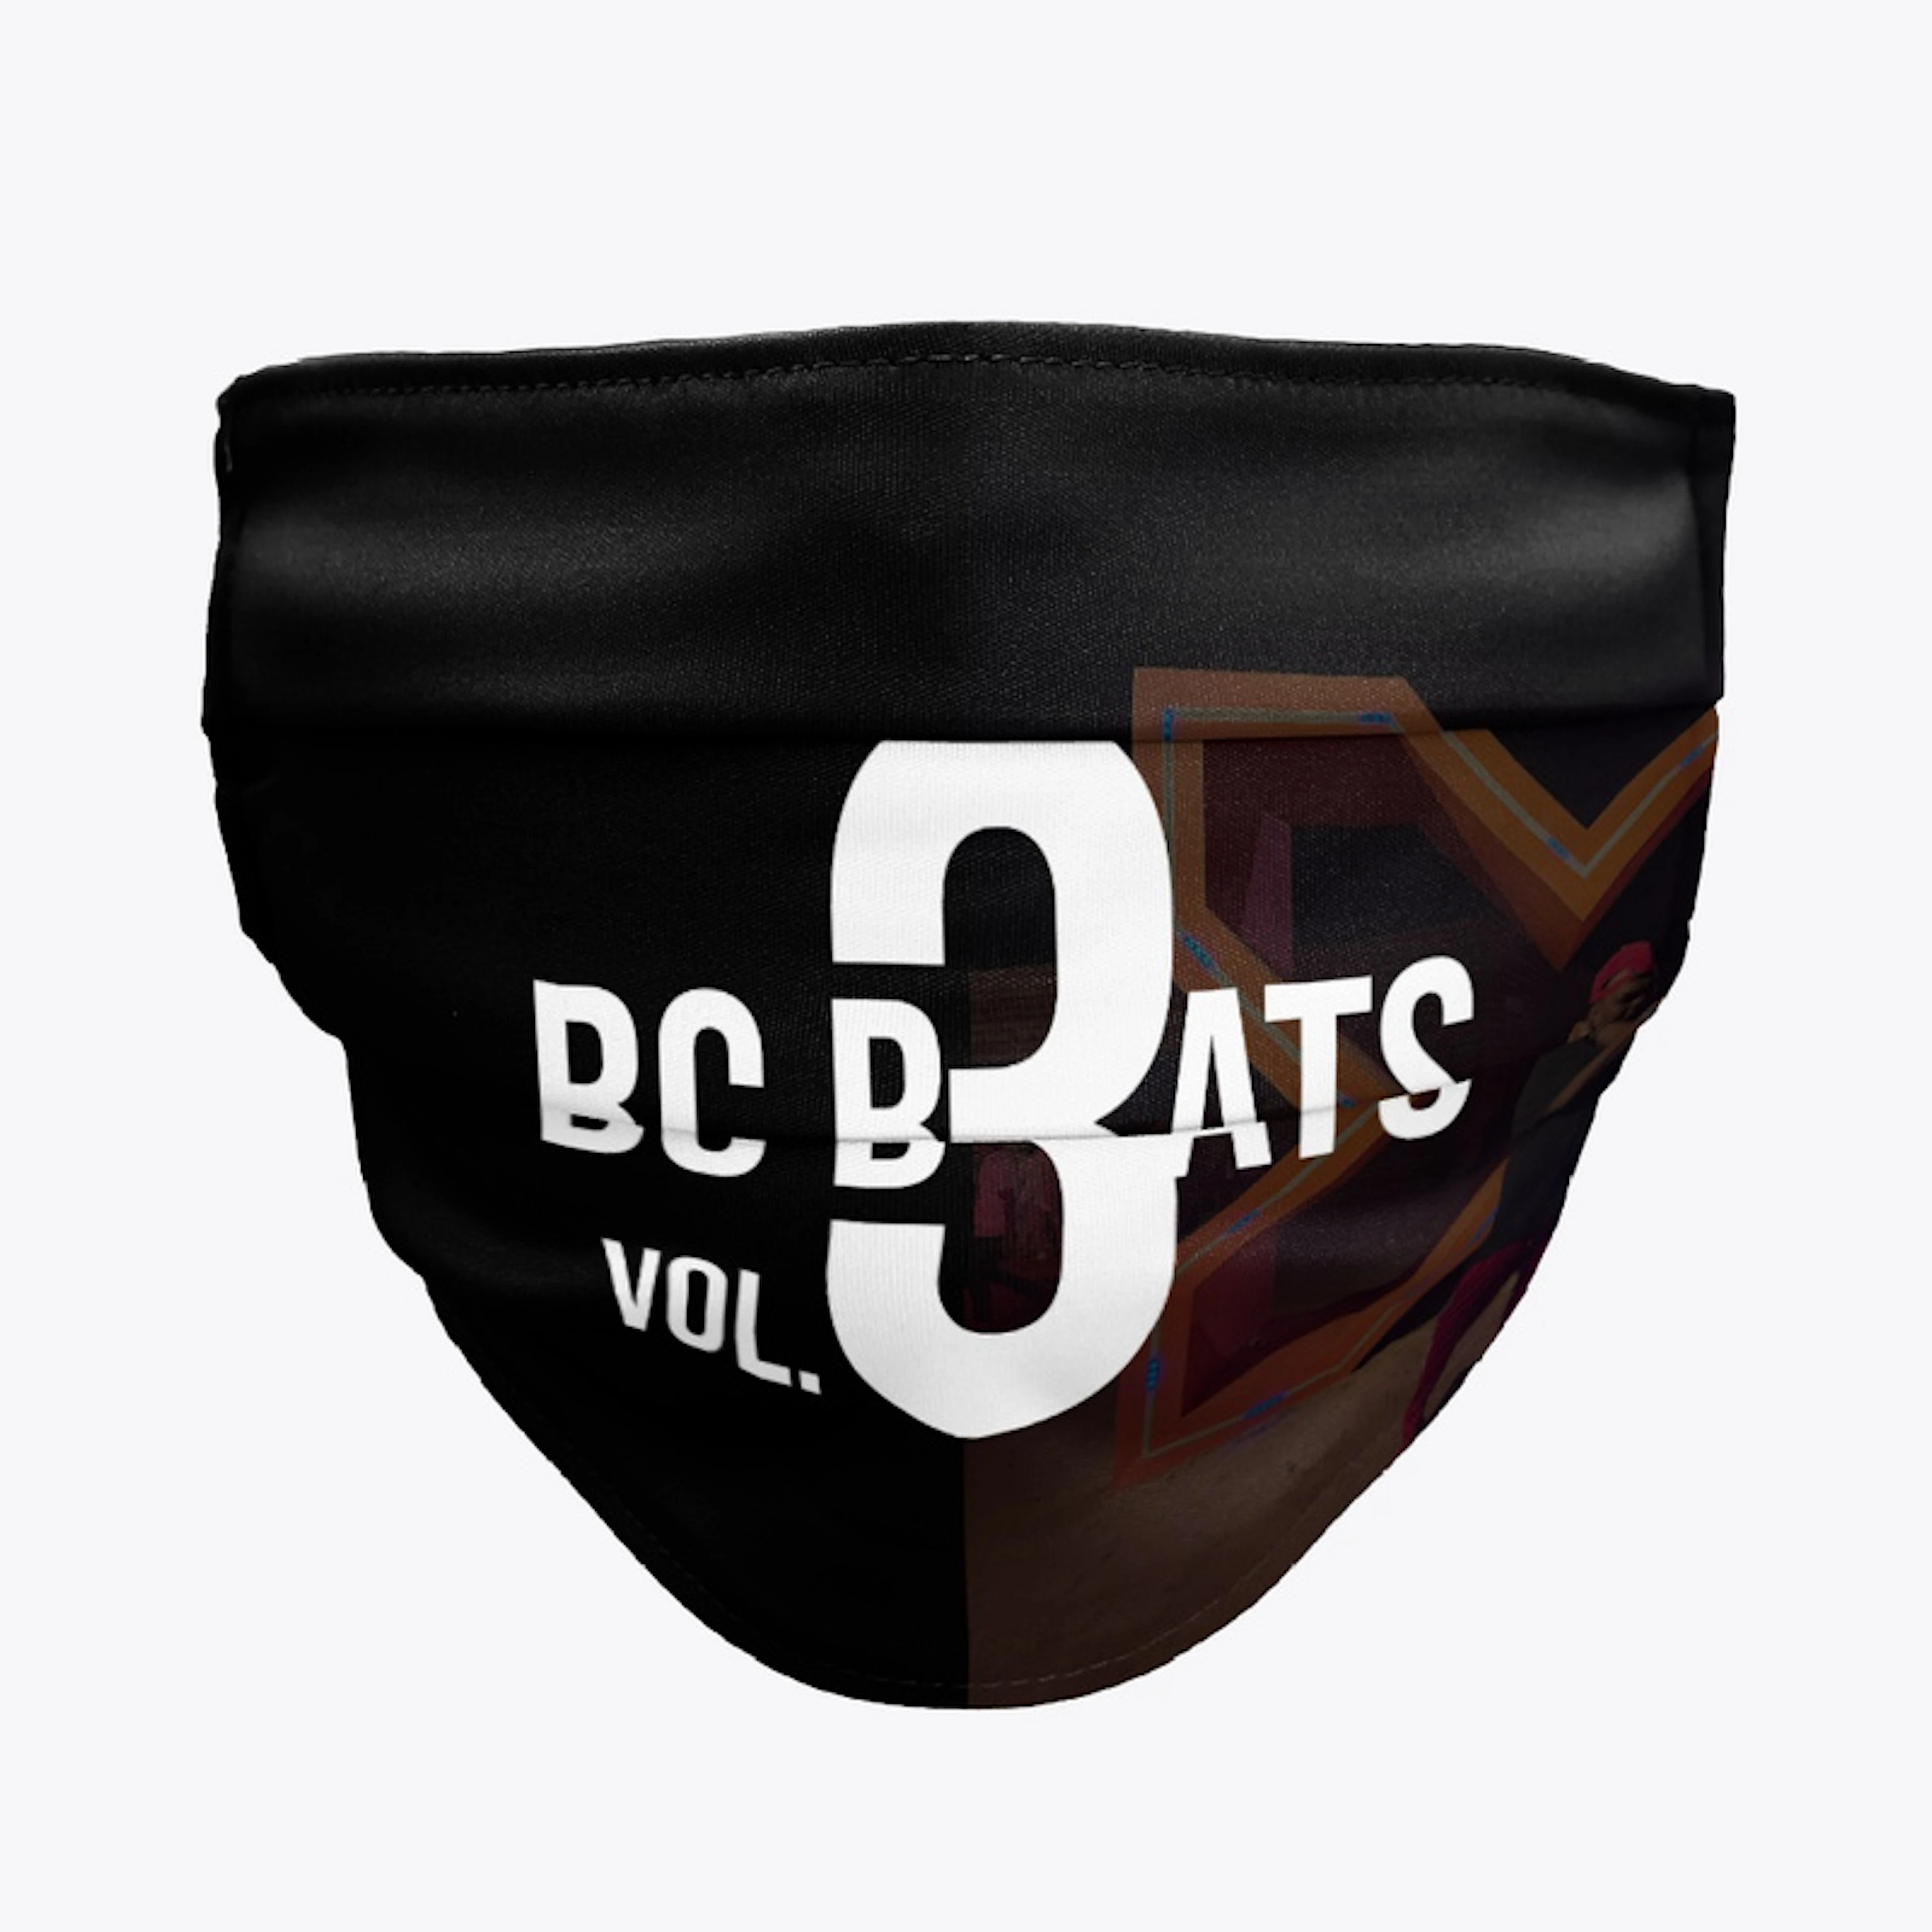 BC Beats Vol. 3 Collection